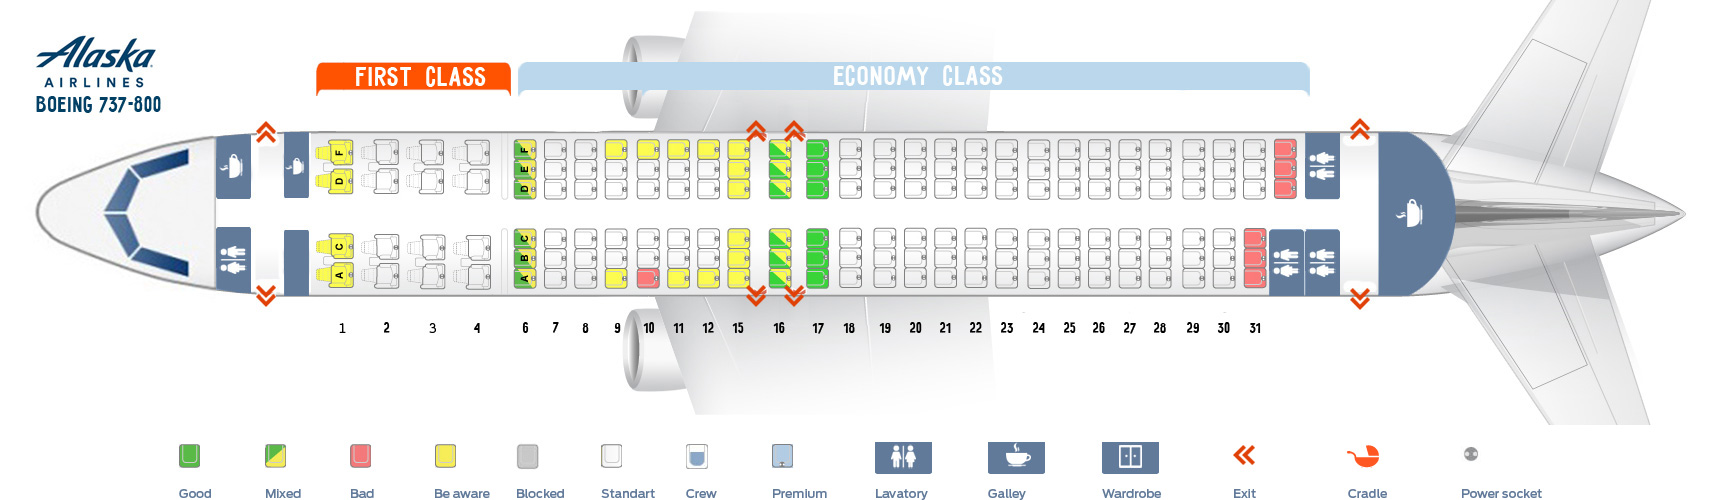 Alaska Airlines Plane Seating Chart